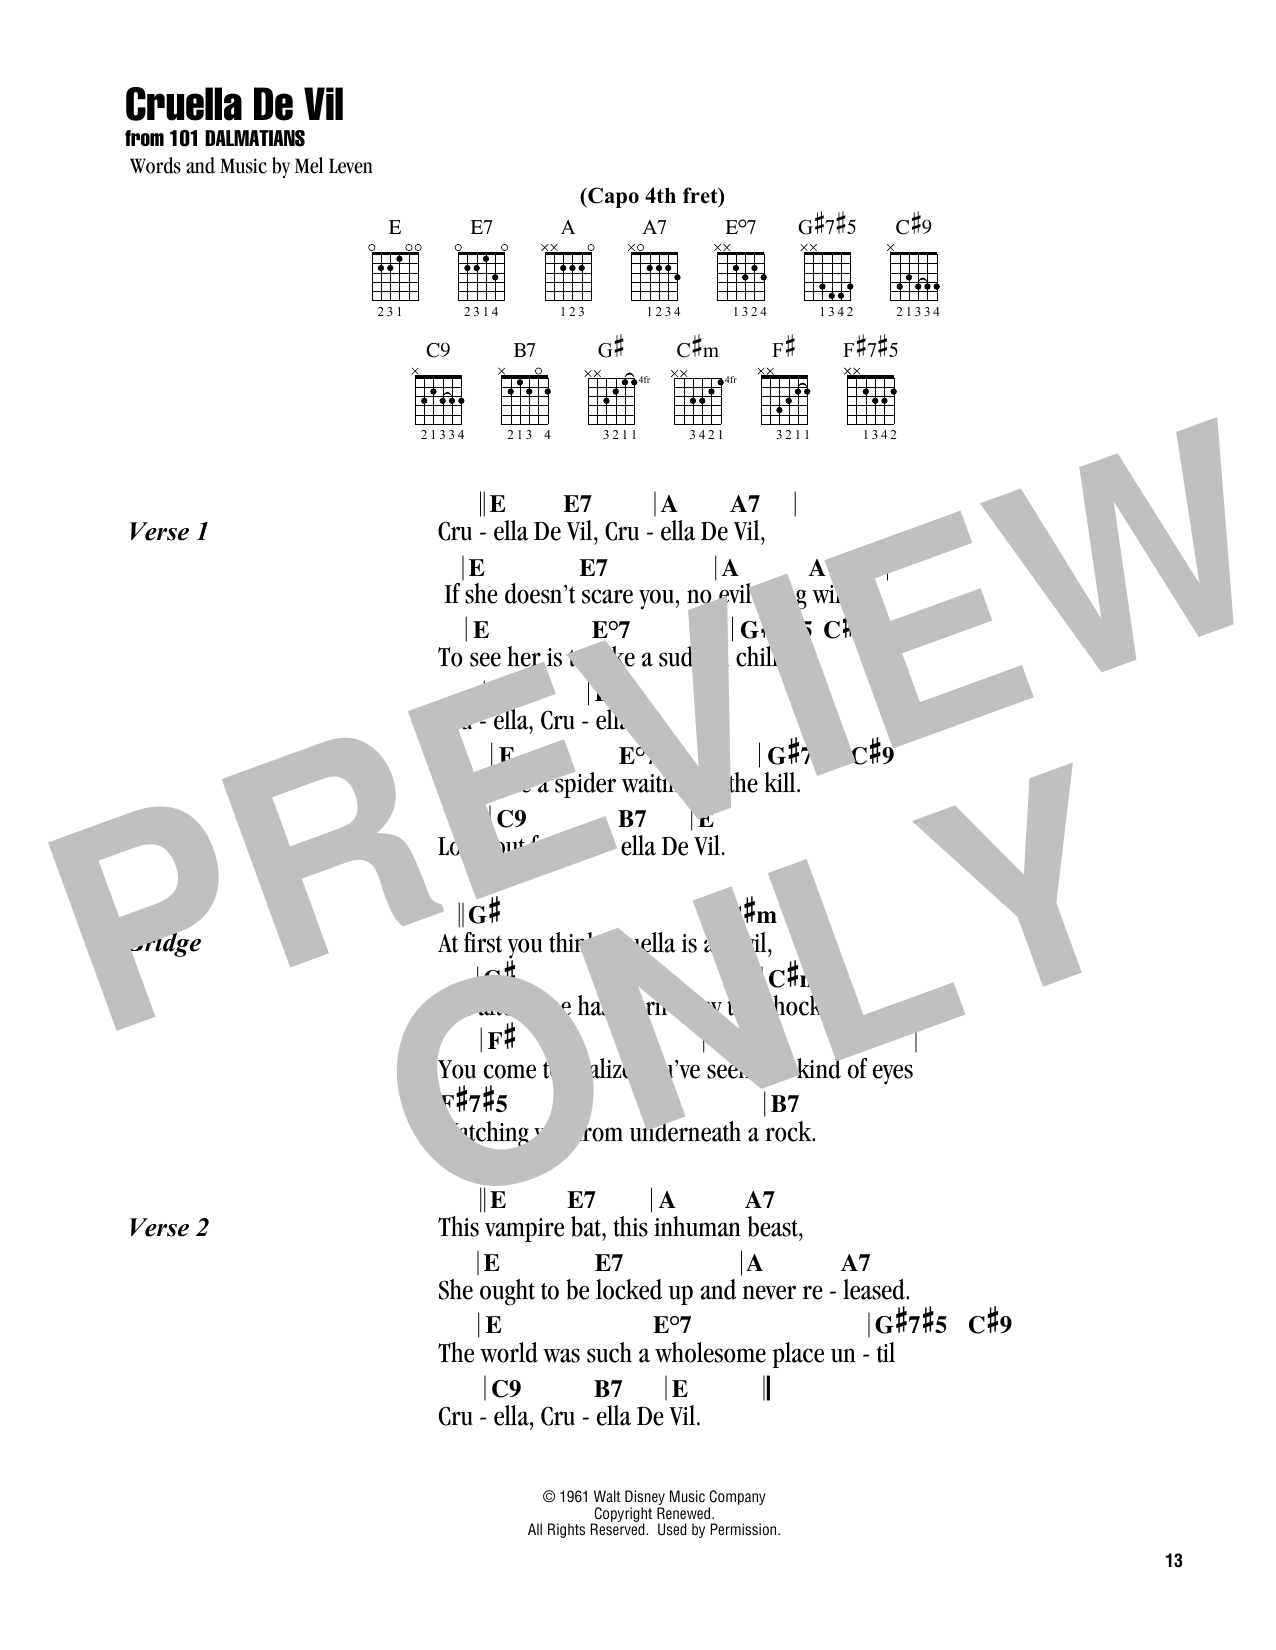 Mel Leven Cruella De Vil (from 101 Dalmatians) Sheet Music Notes & Chords for Flute Duet - Download or Print PDF